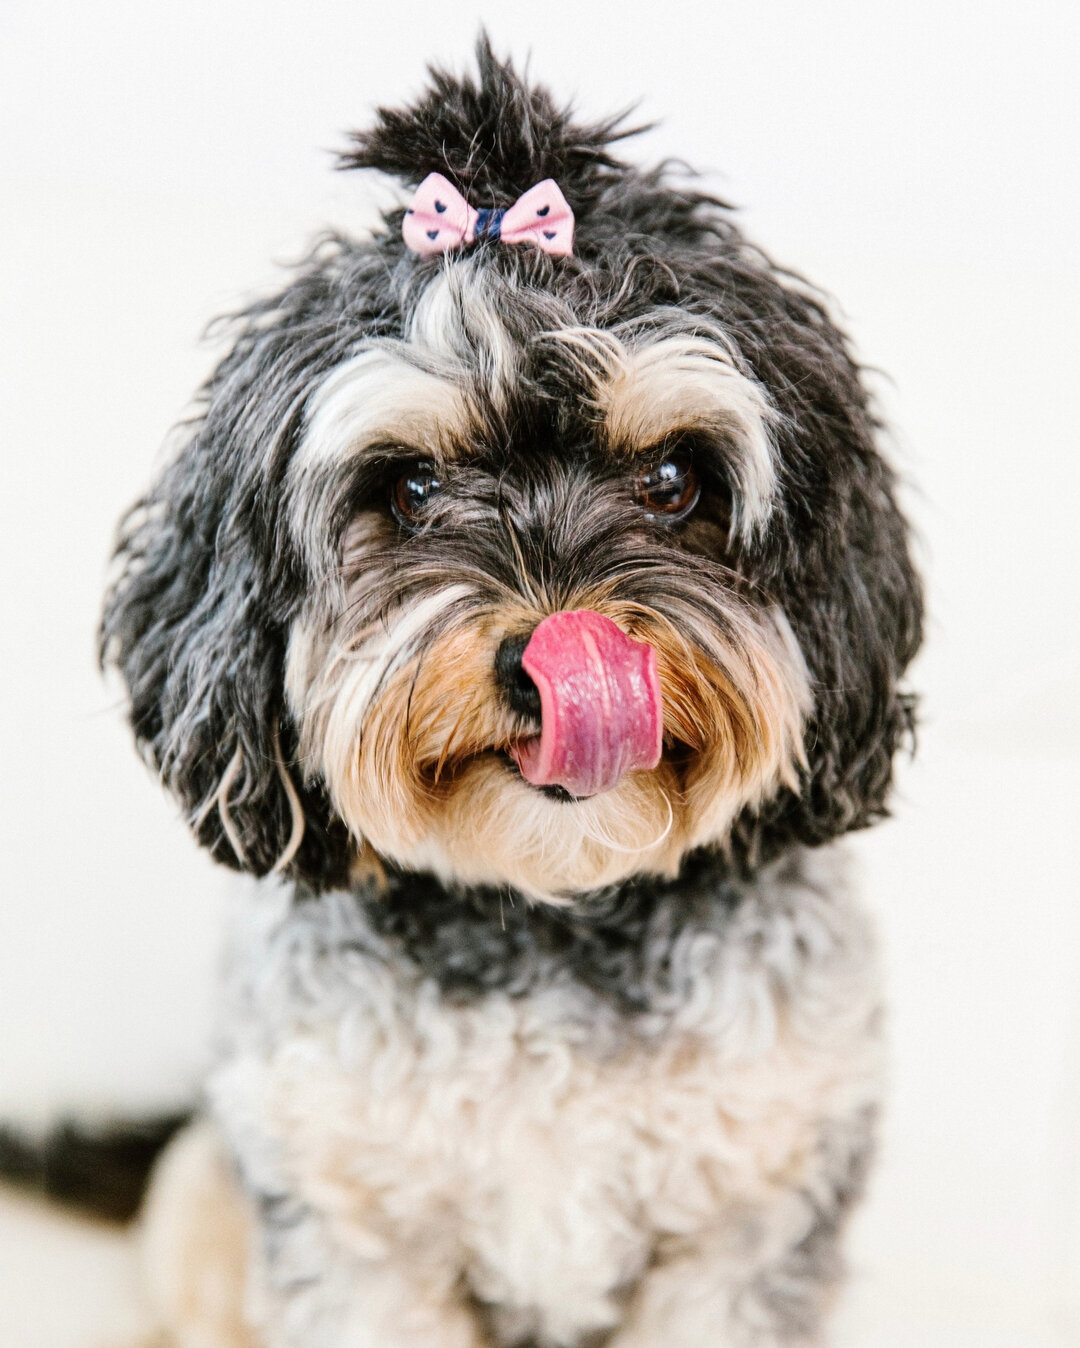 Happy #tonguesouttuesday! Love, Lily ❤️​​​​​​​​​​​​​​​​​
​​​​​​​​
 #tonguesouttuesday #tot #tongueouttuesday #tonguesout #puppy #doglife #cute #tongue #dogsofinsta #adoptdontshop #dogslife #happydog #dogstagram #dogphotographer #dogsofmn #dogsofstpau